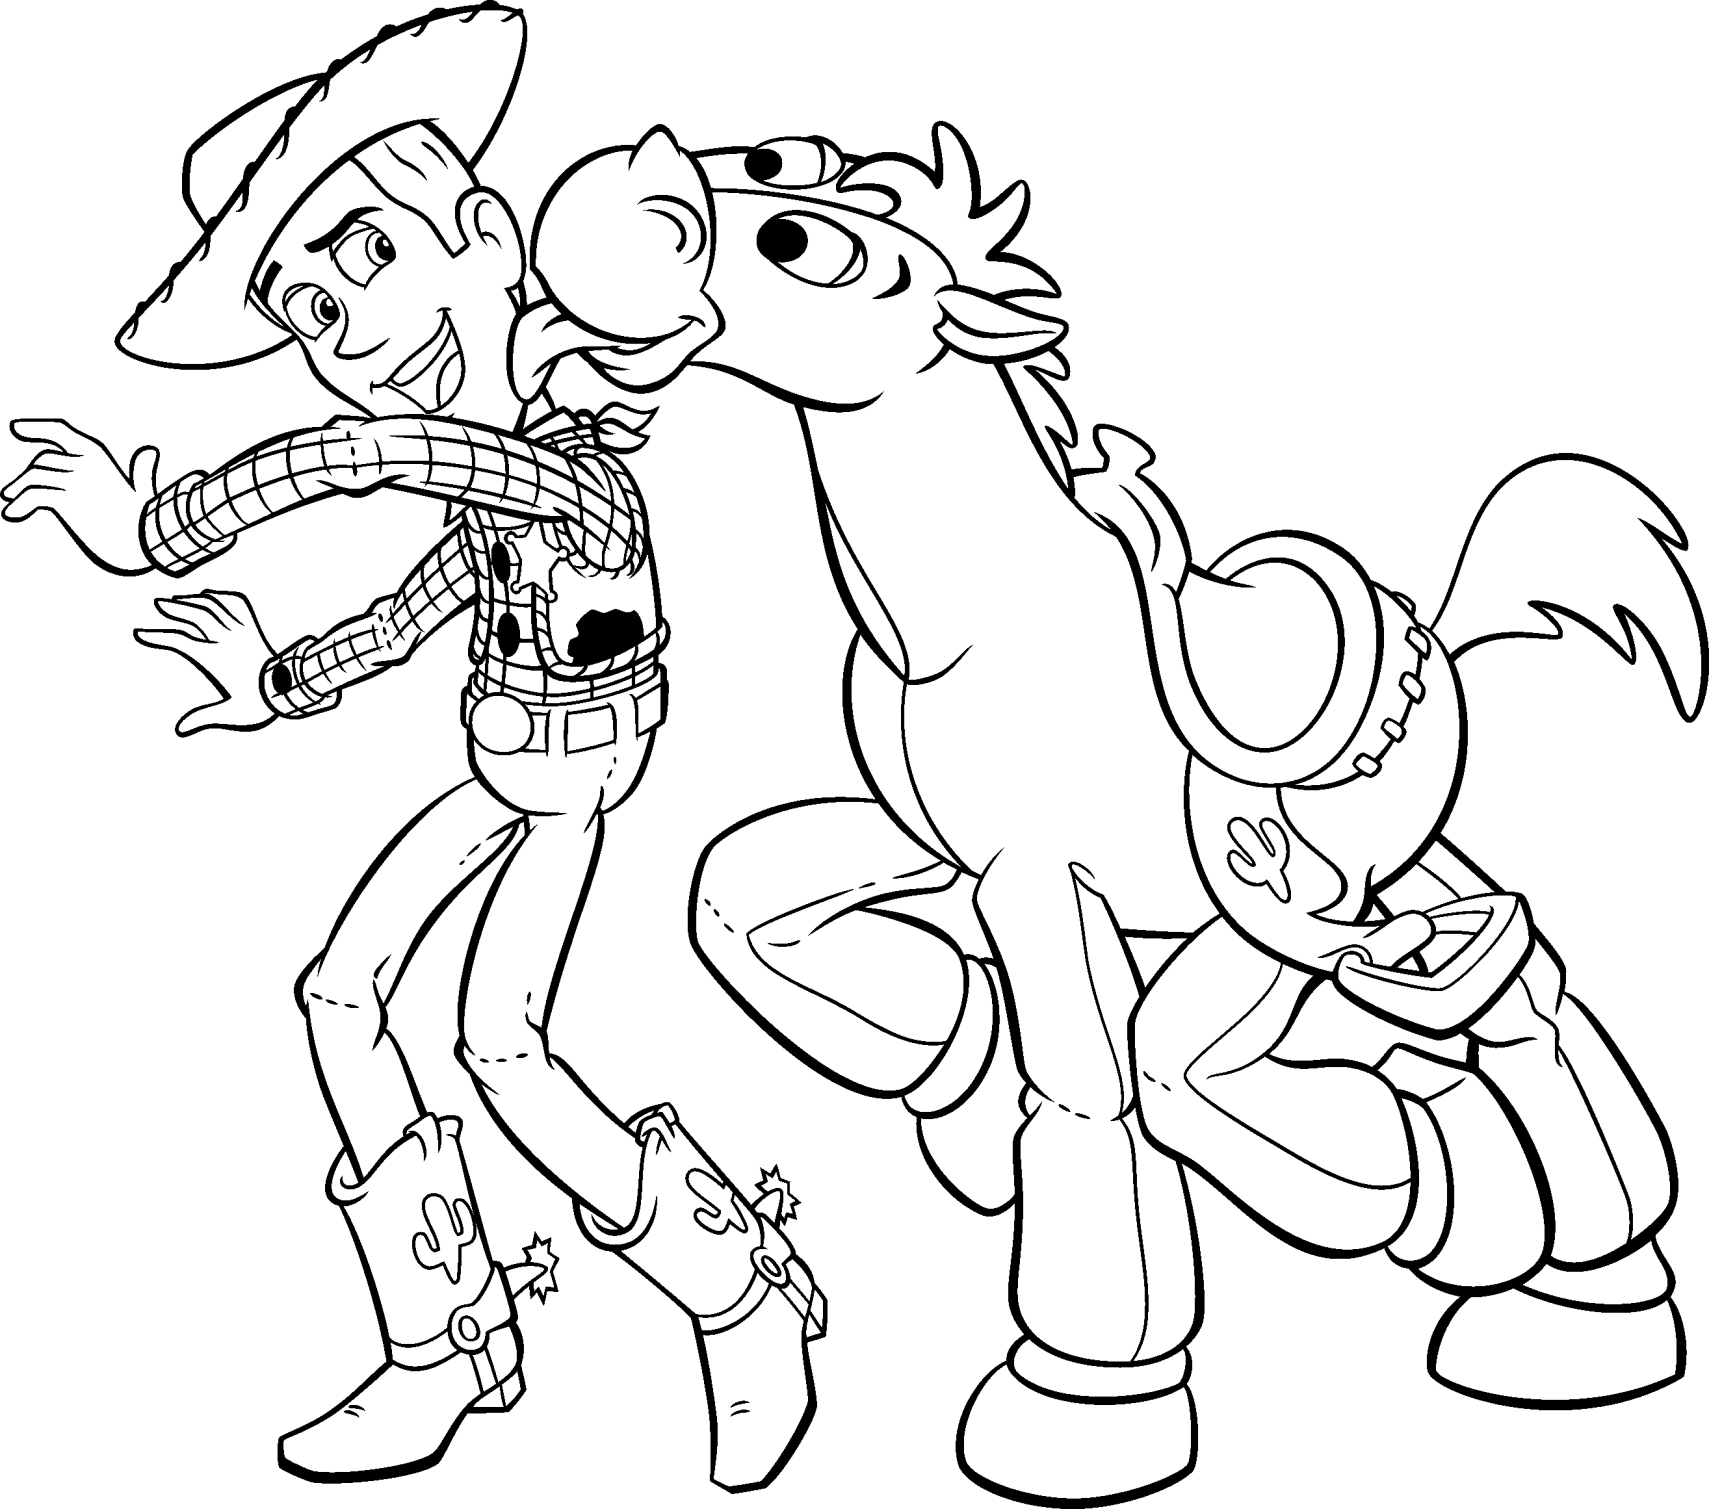 Woody und Bullseye aus Toy Story